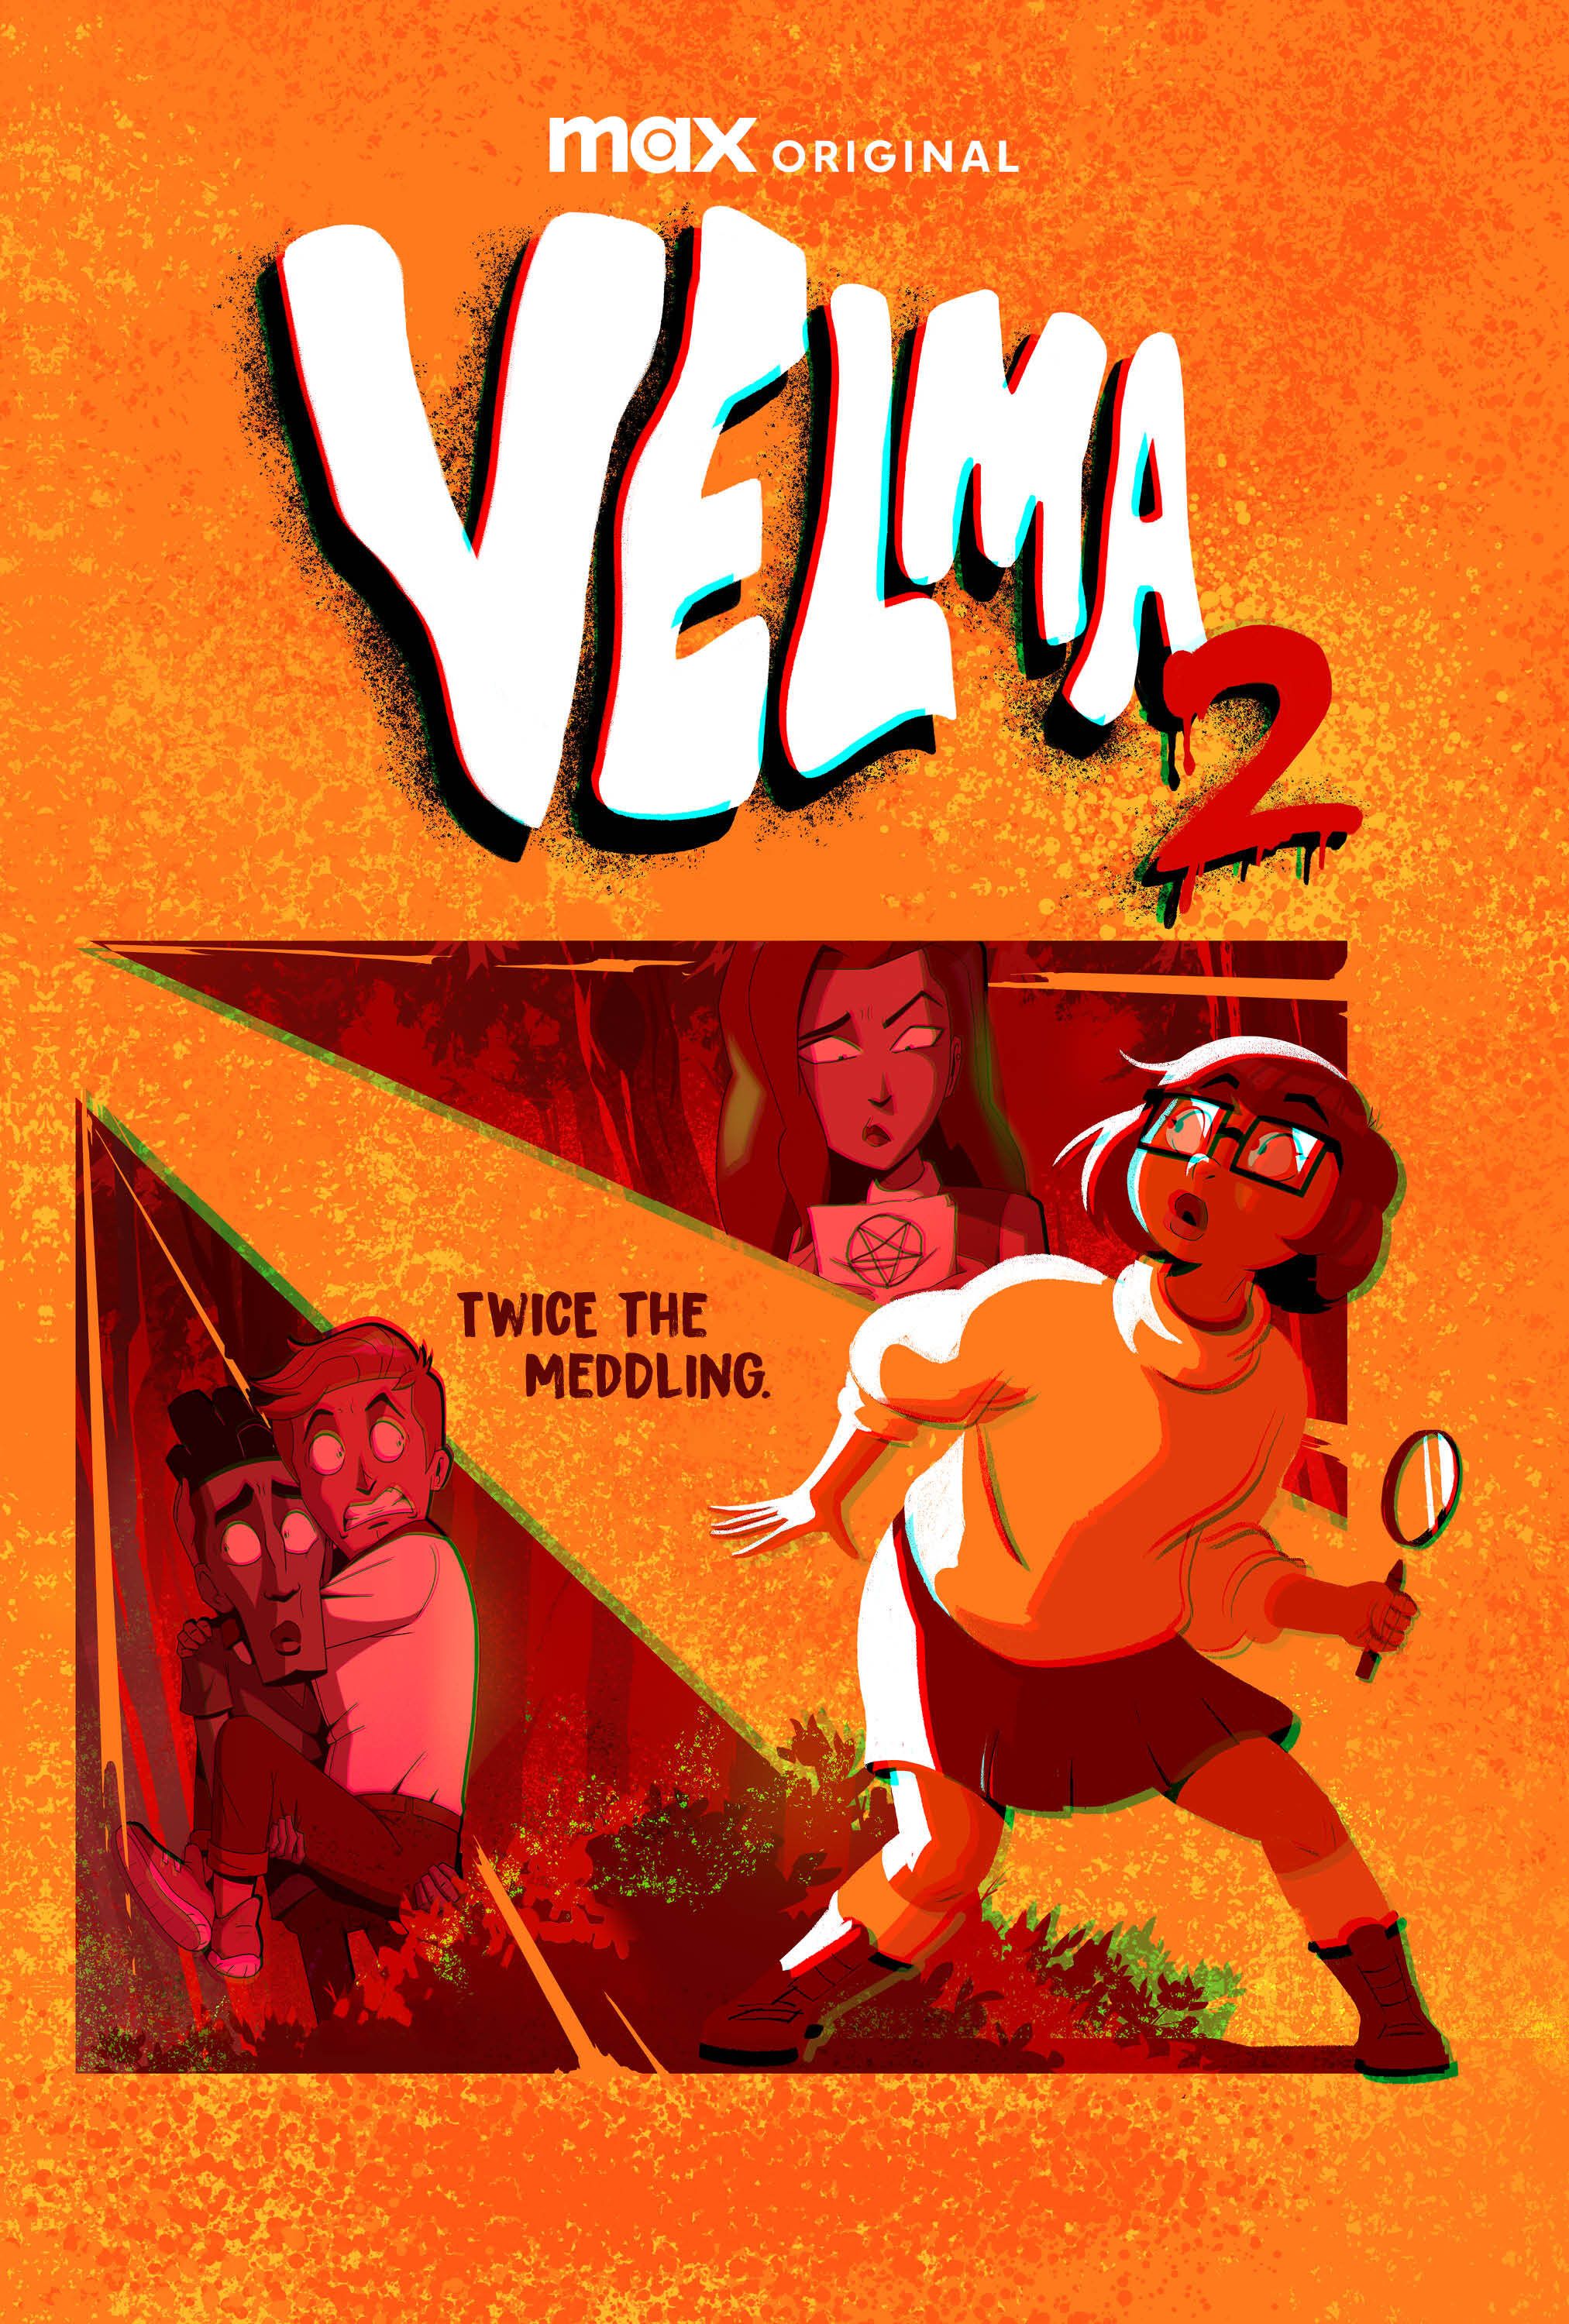 Velma Season 2 Trailer Reveals Gruesome New Serial Killer & Scooby Gang Love Triangle